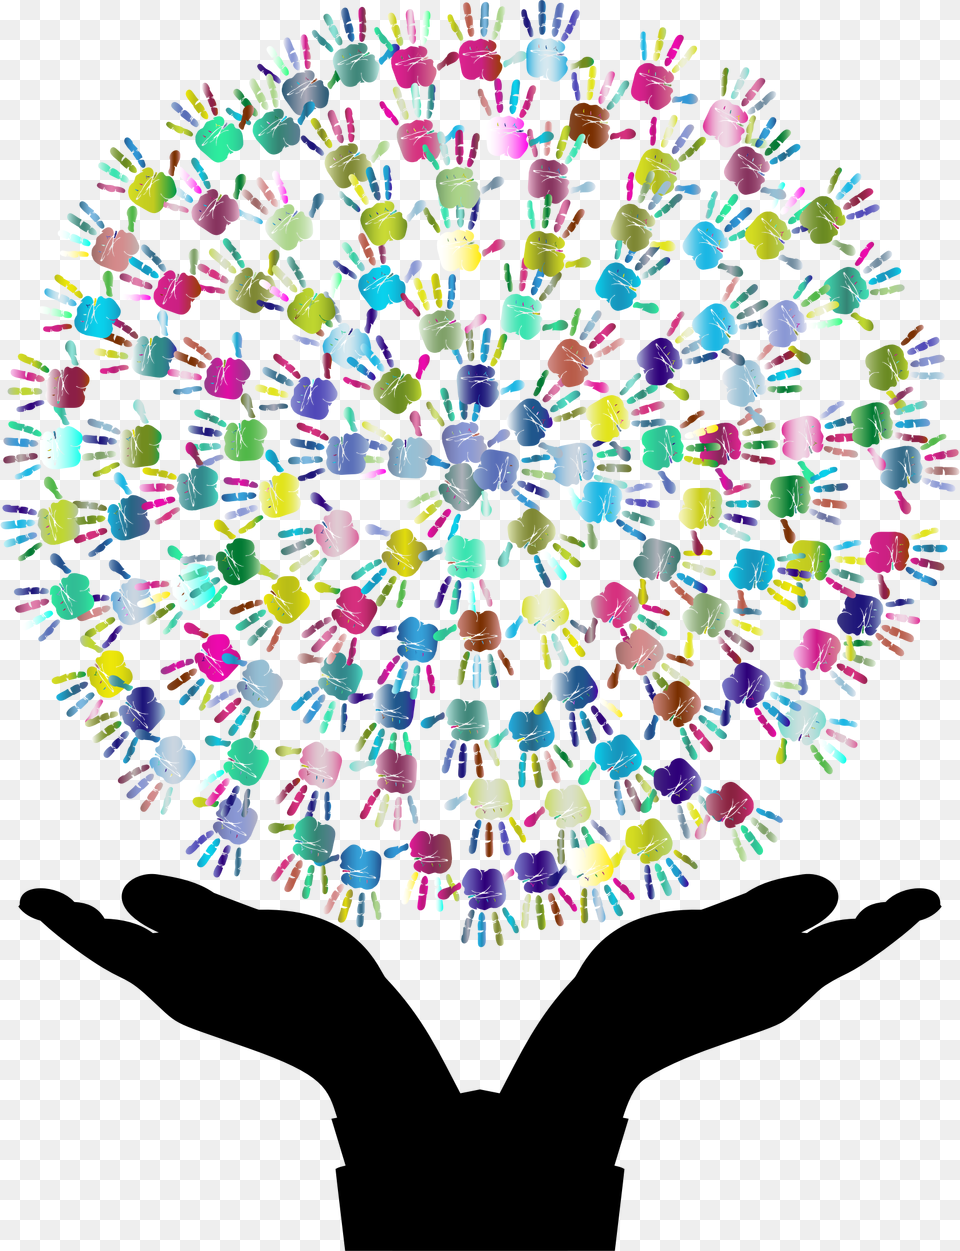 Prismatic Hands Tree 2 Clip Arts Logo Tree Hands, Art, Paper, Confetti, Chandelier Png Image